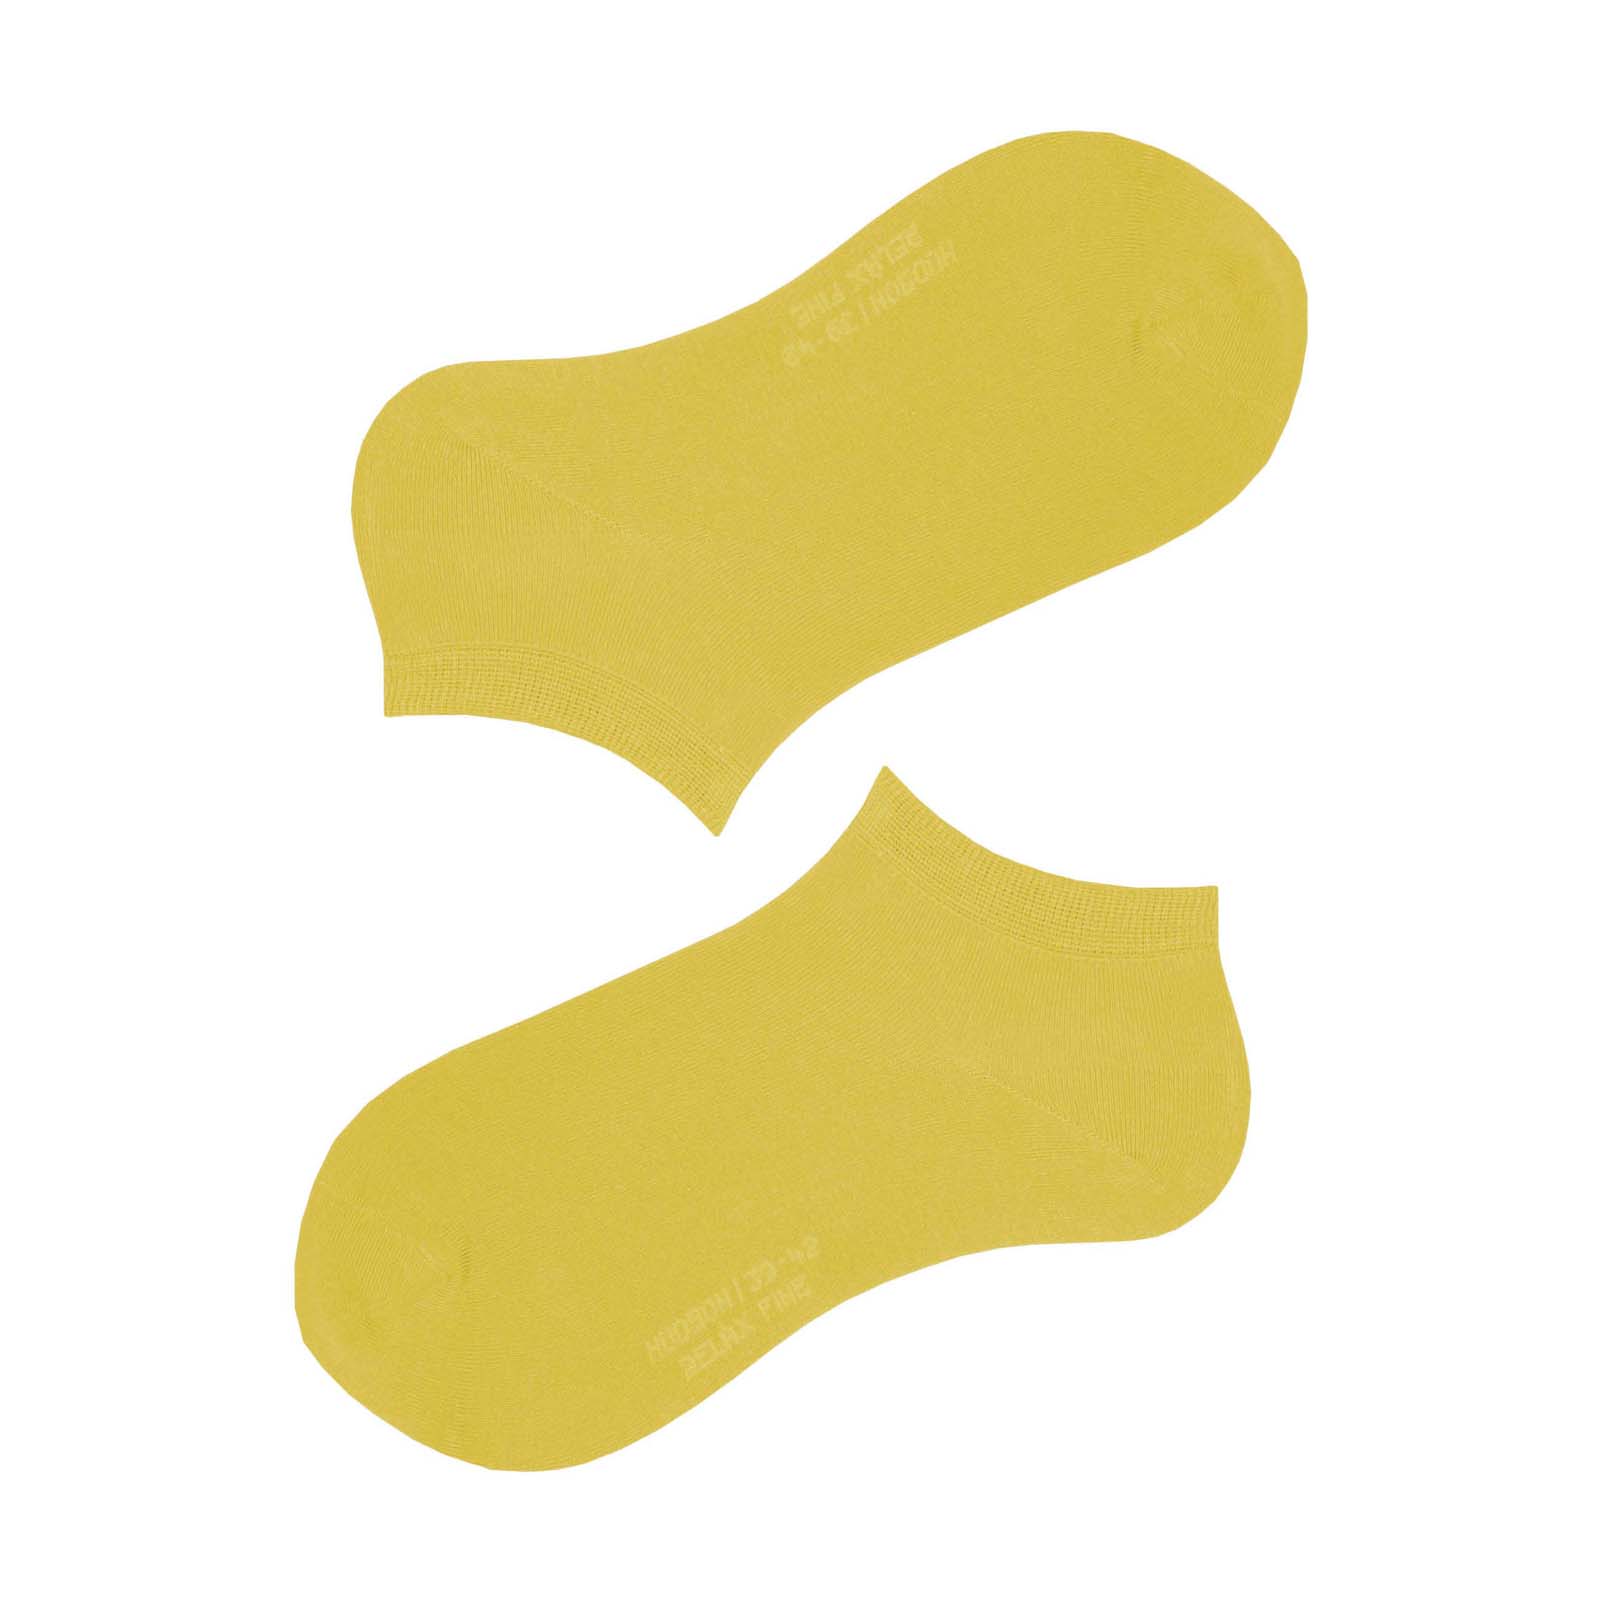 HUDSON Damen RELAX FINE -  35/38 - Sneaker Socken mit softer Qualität - Canary (Gelb)